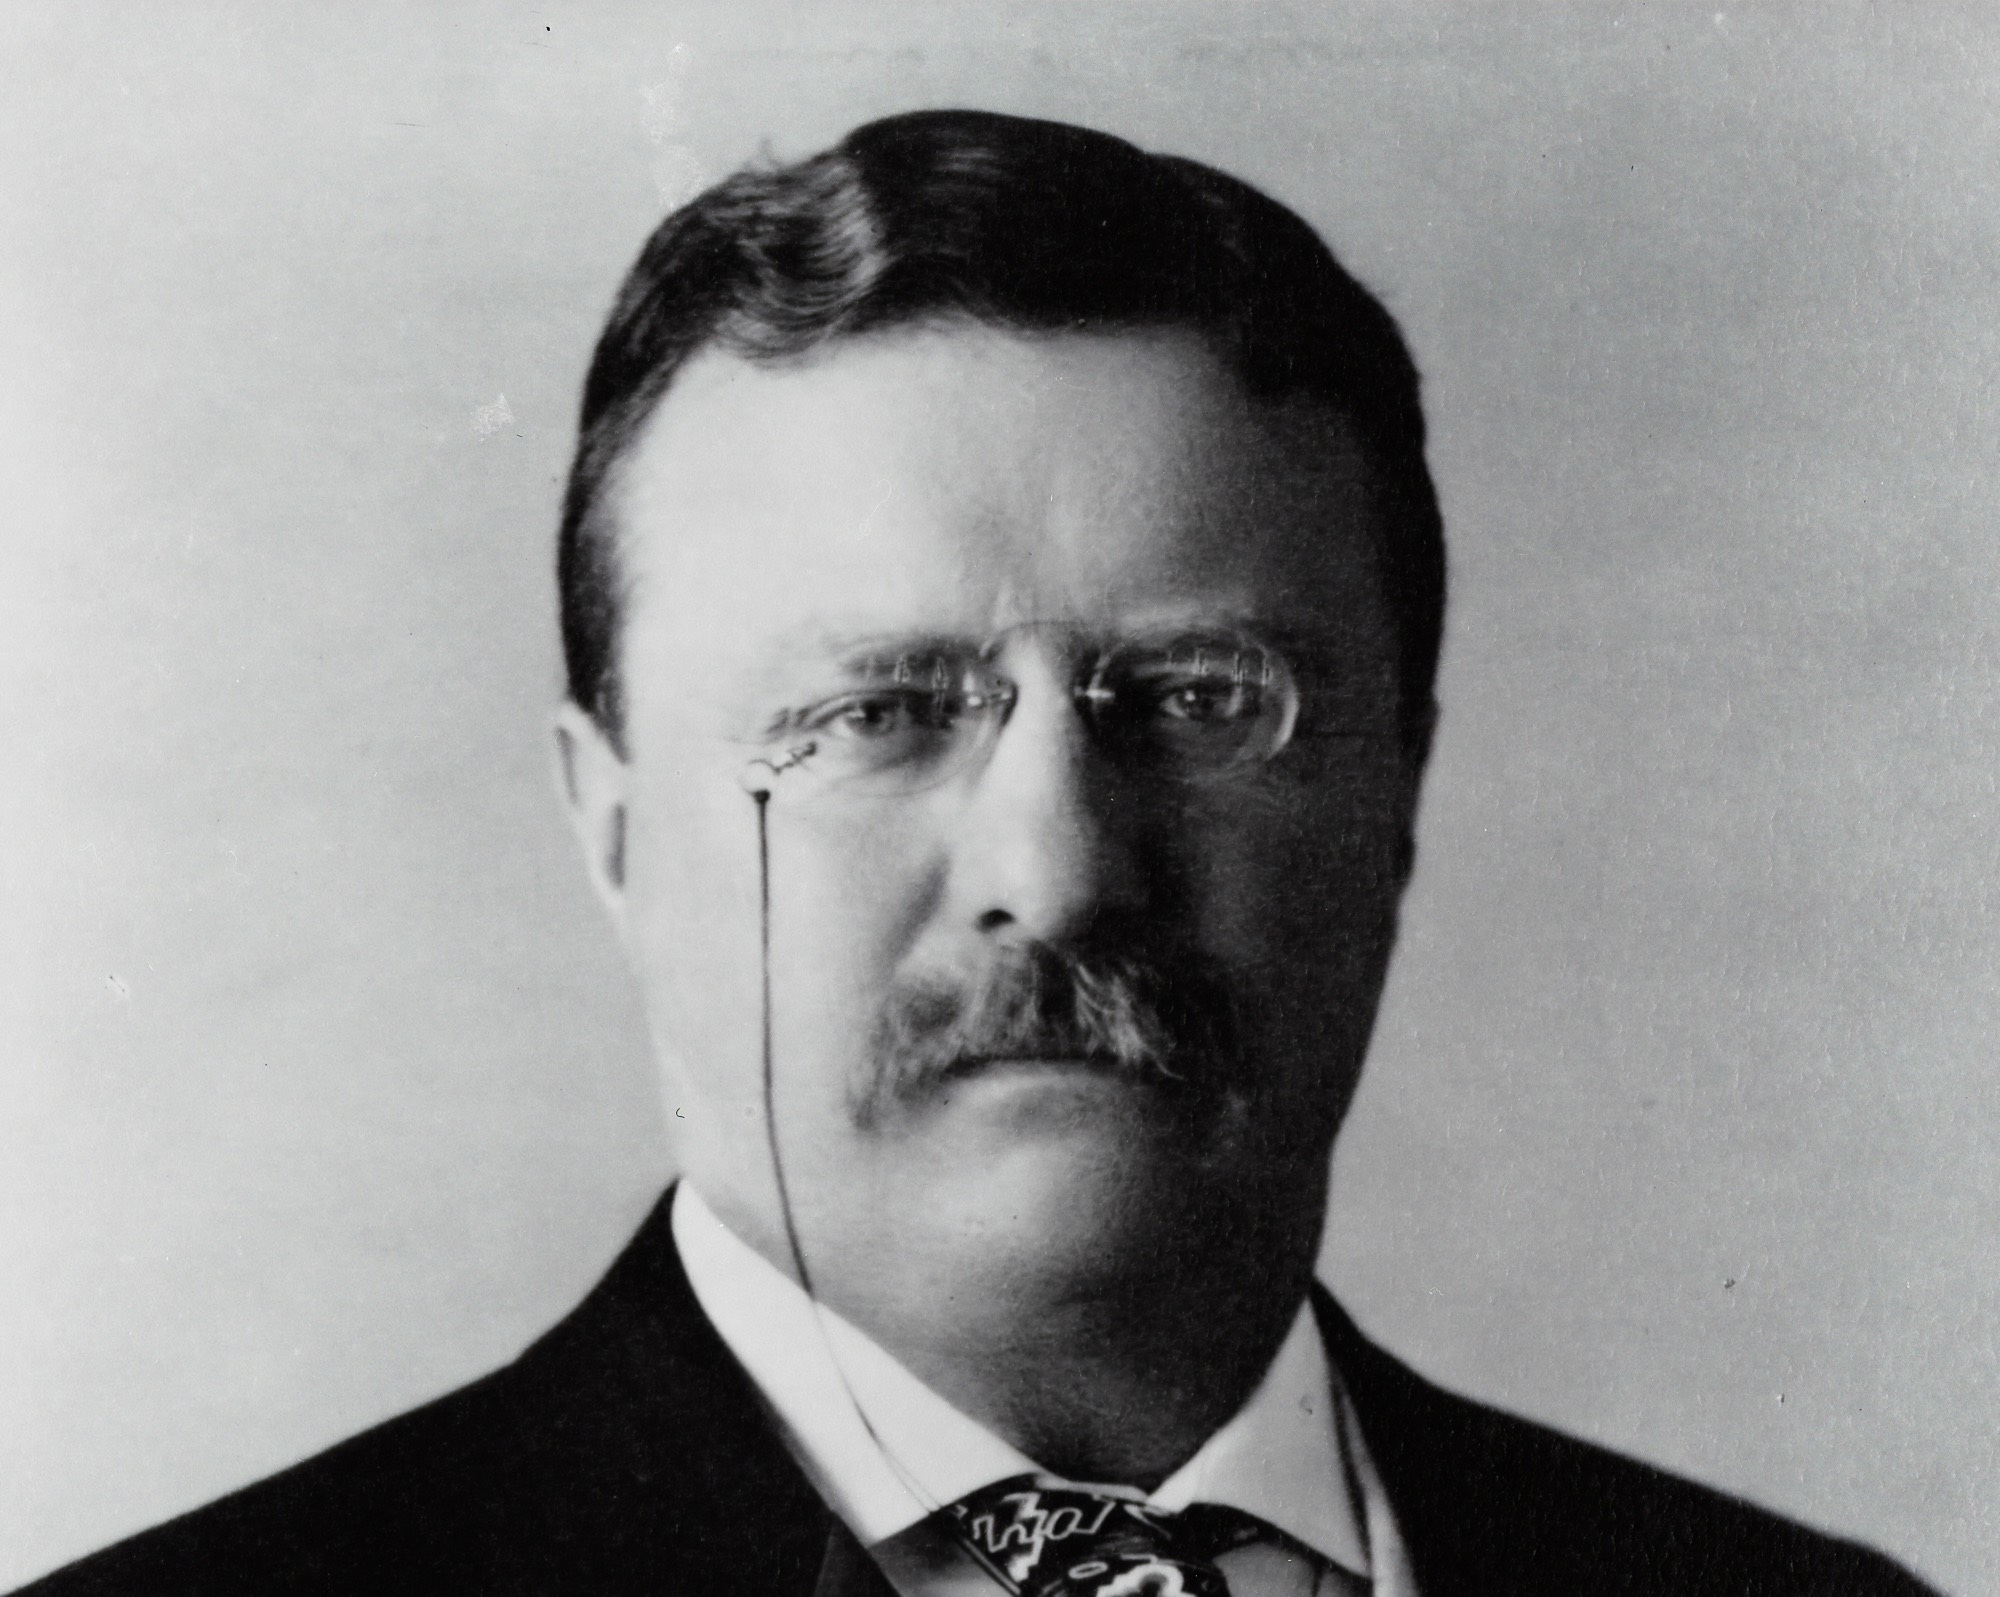 6. Teddy Roosevelt mustache tattoo - wide 2